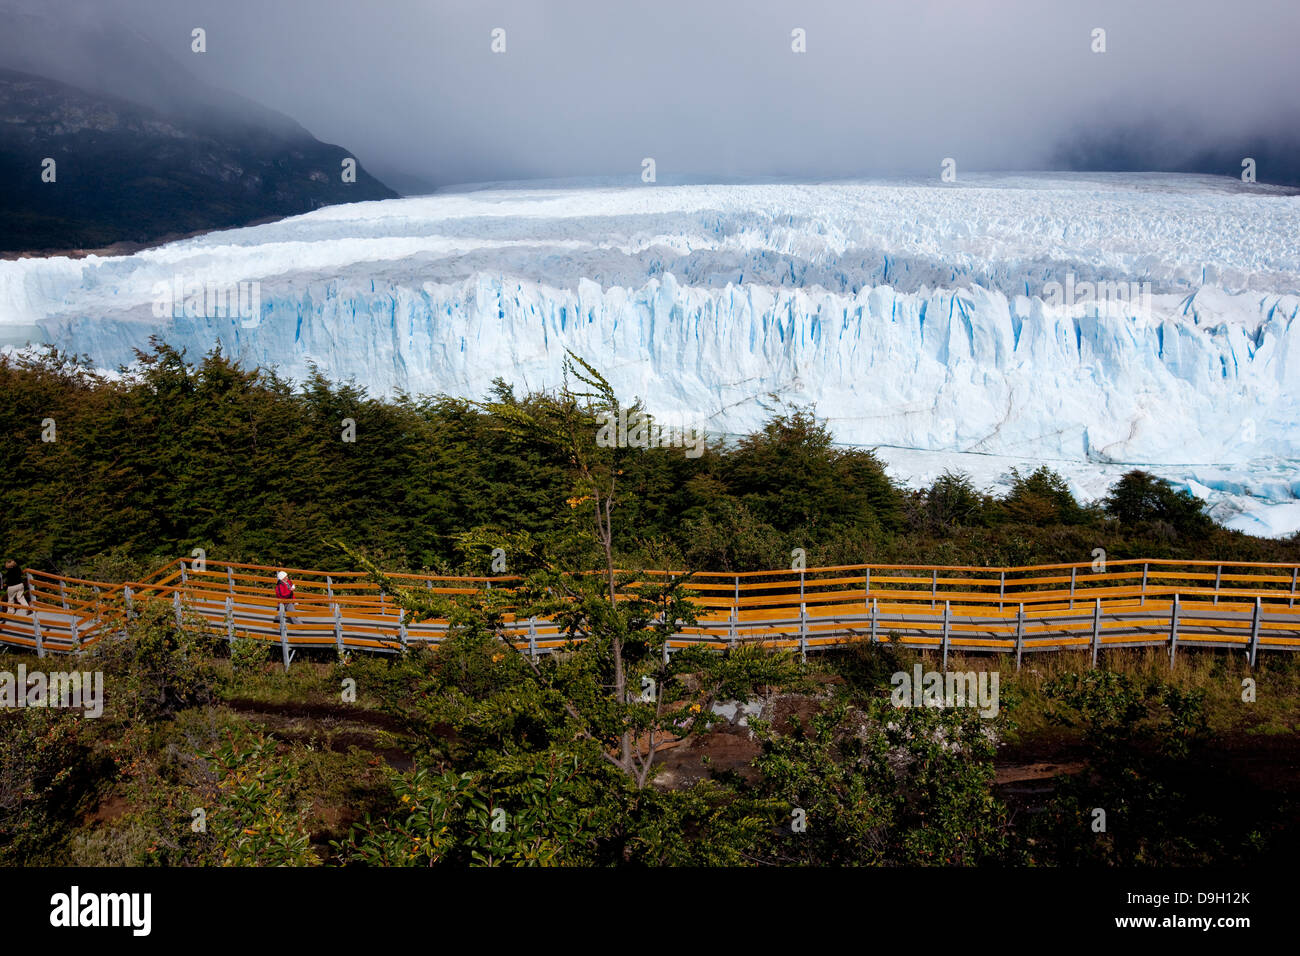 Footbridges near Perito Moreno Glacier. This glacier originates from the Southern Patagonian Ice Field. Stock Photo